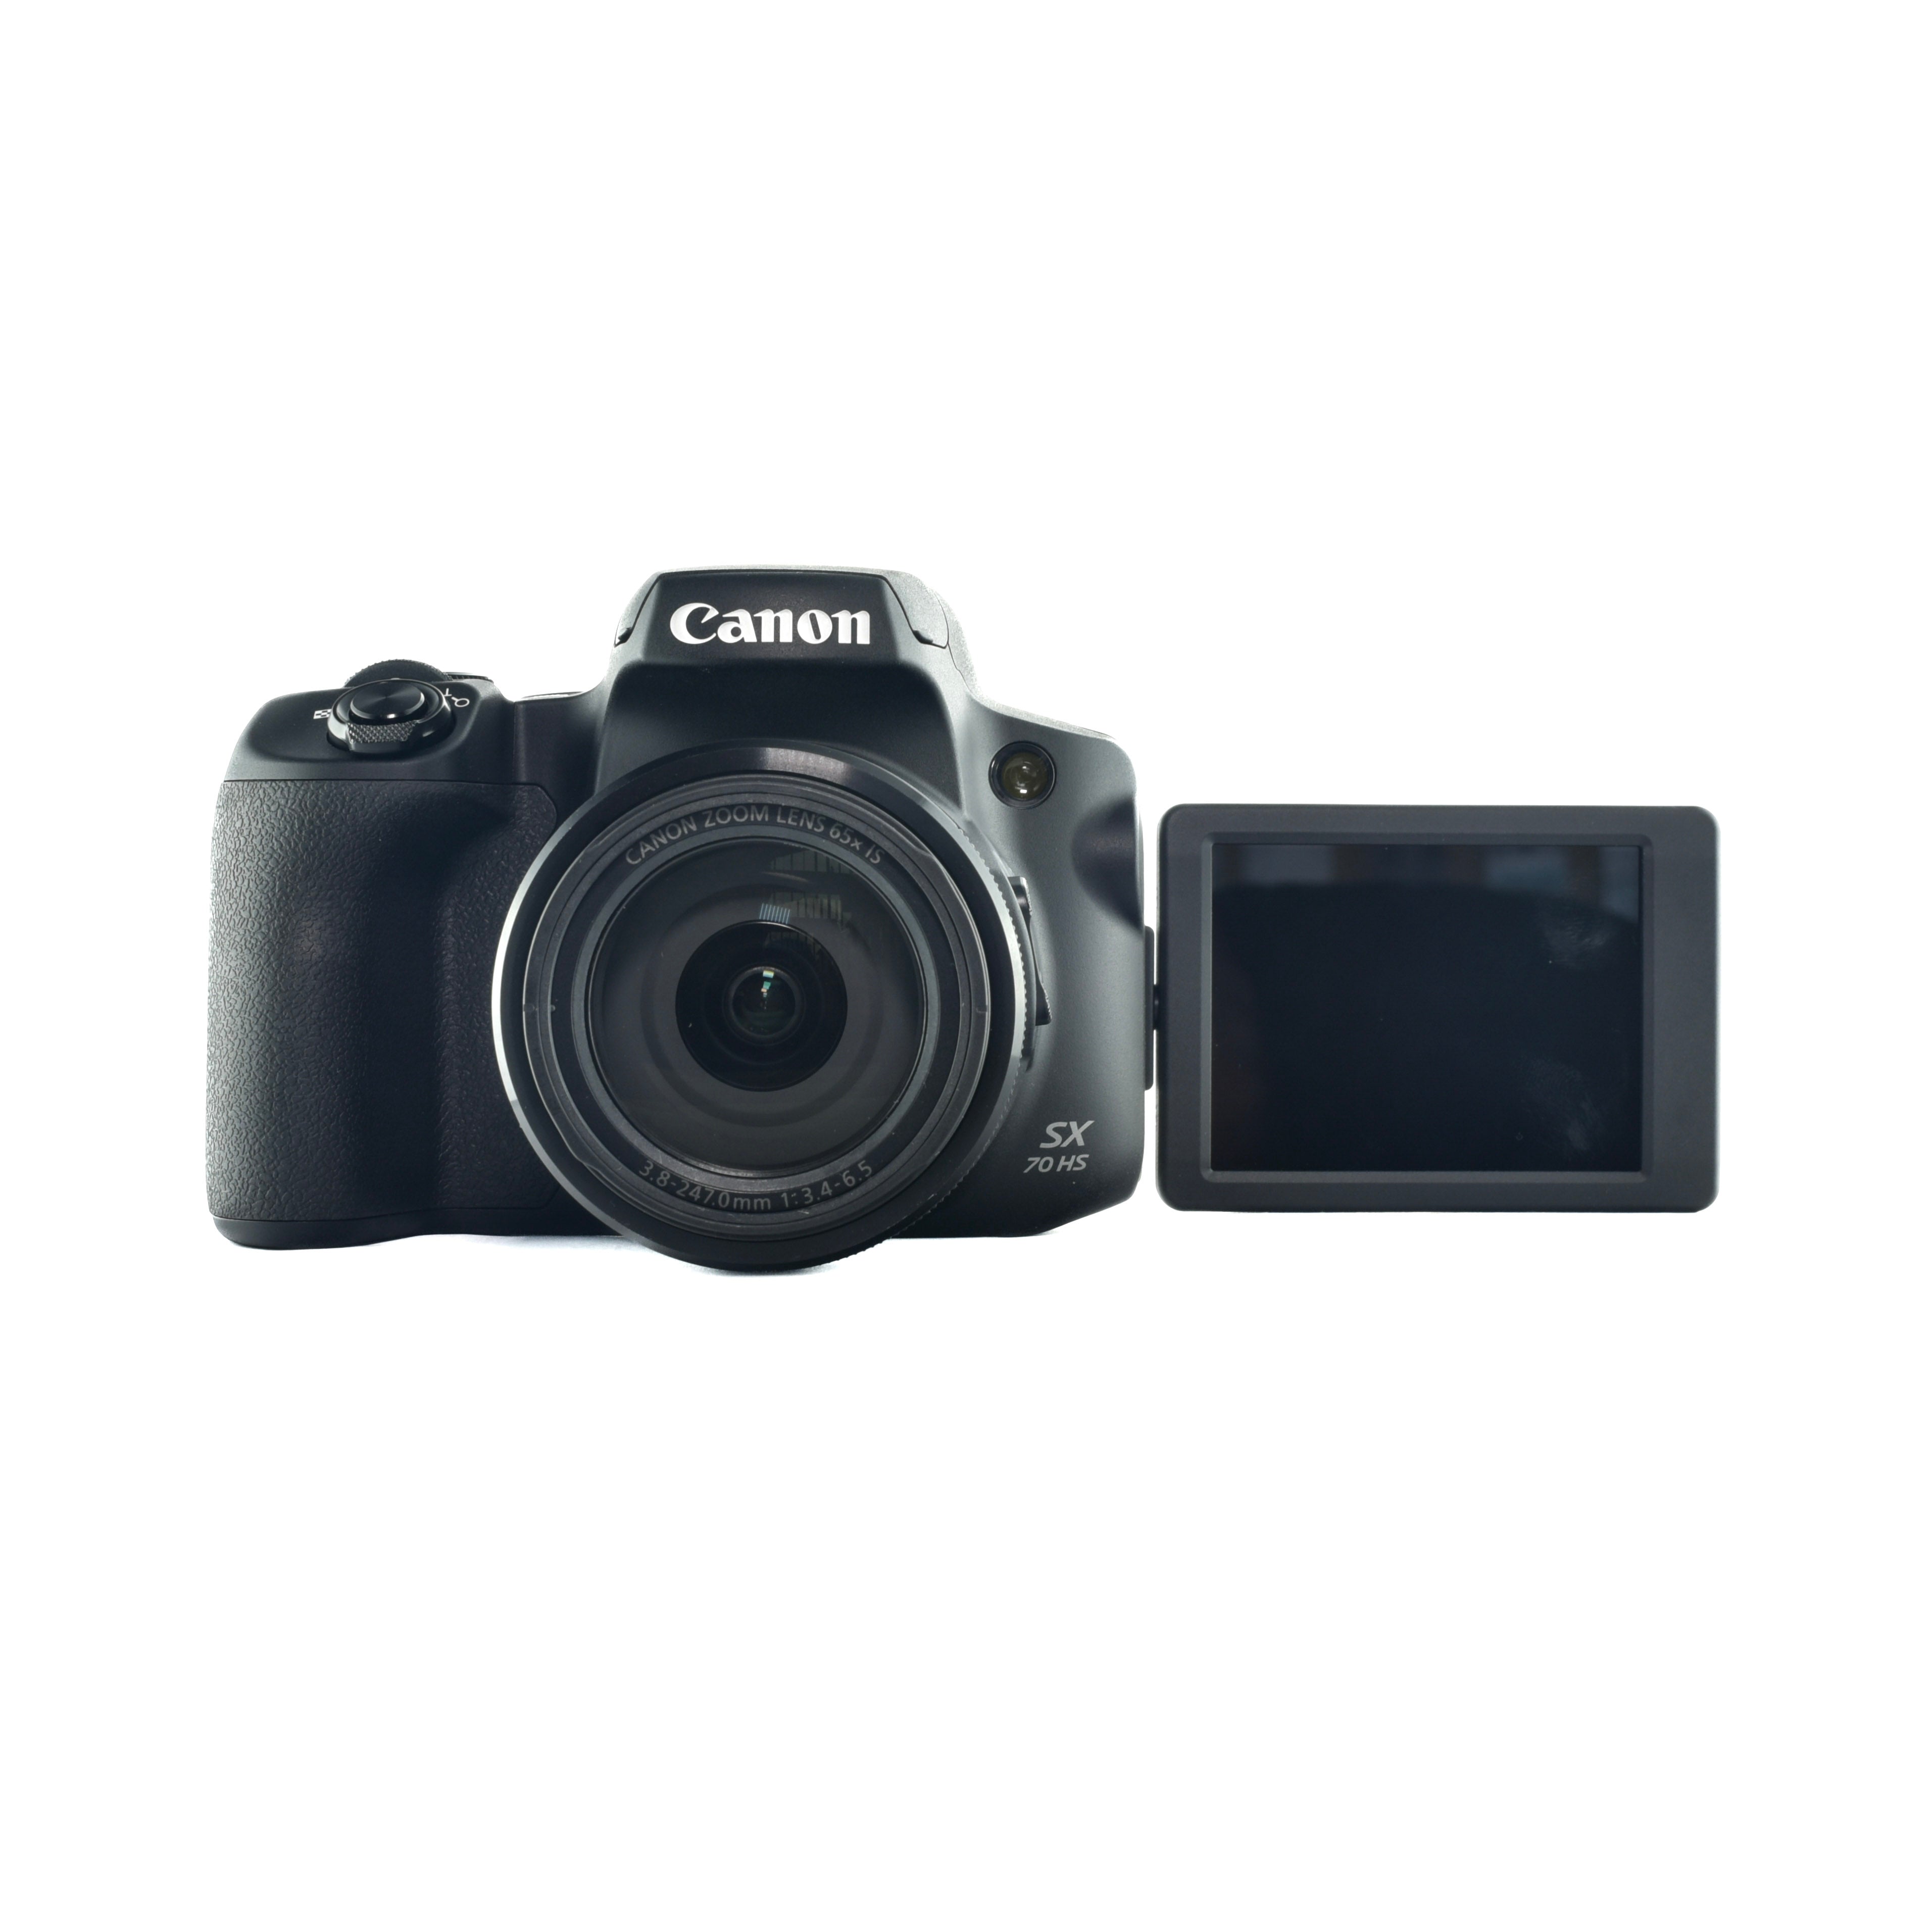 Canon PowerShot SX70 HS bridging camera